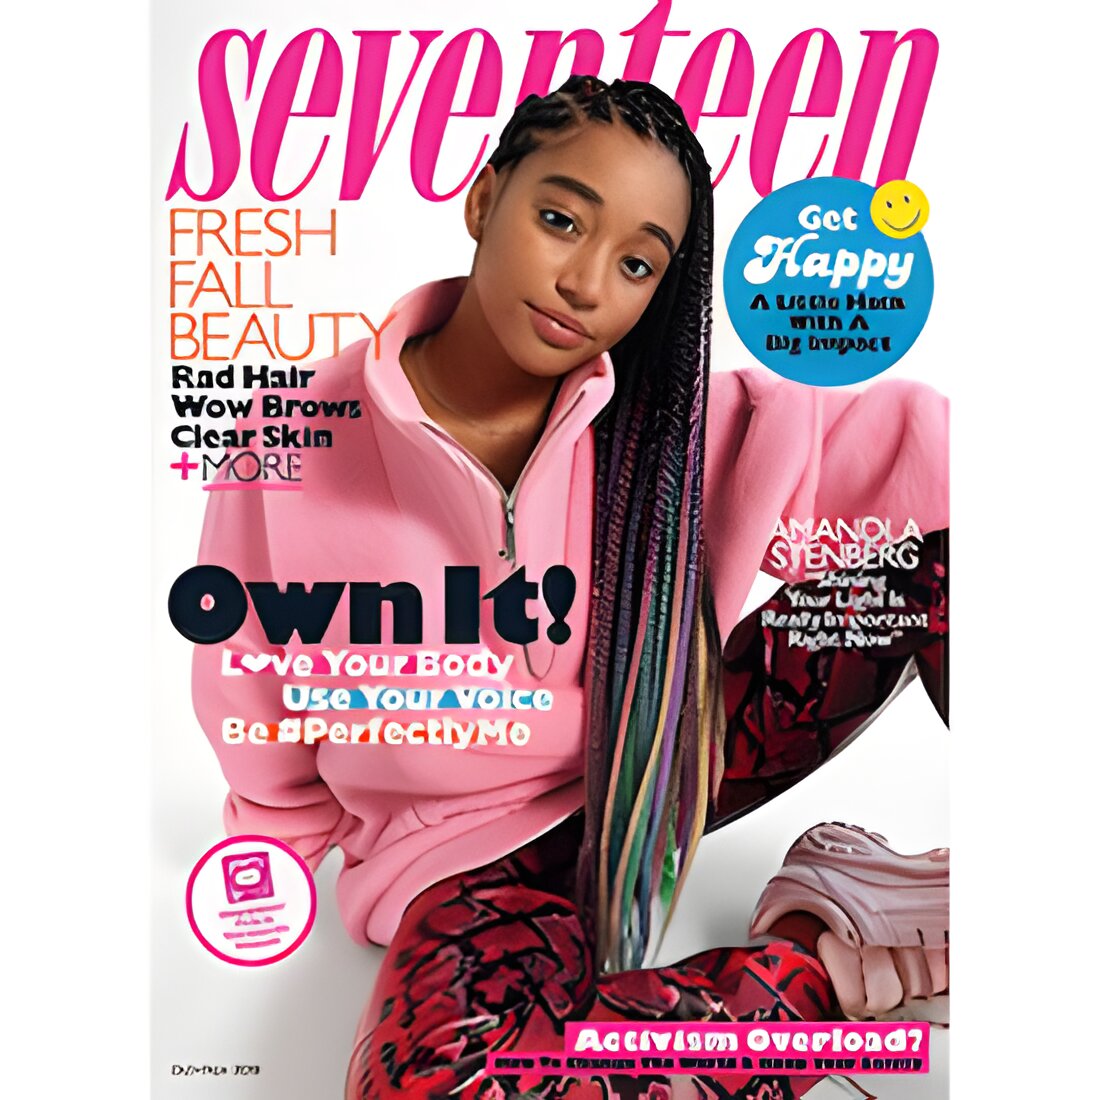 Free Copy Of Seventeen Magazine